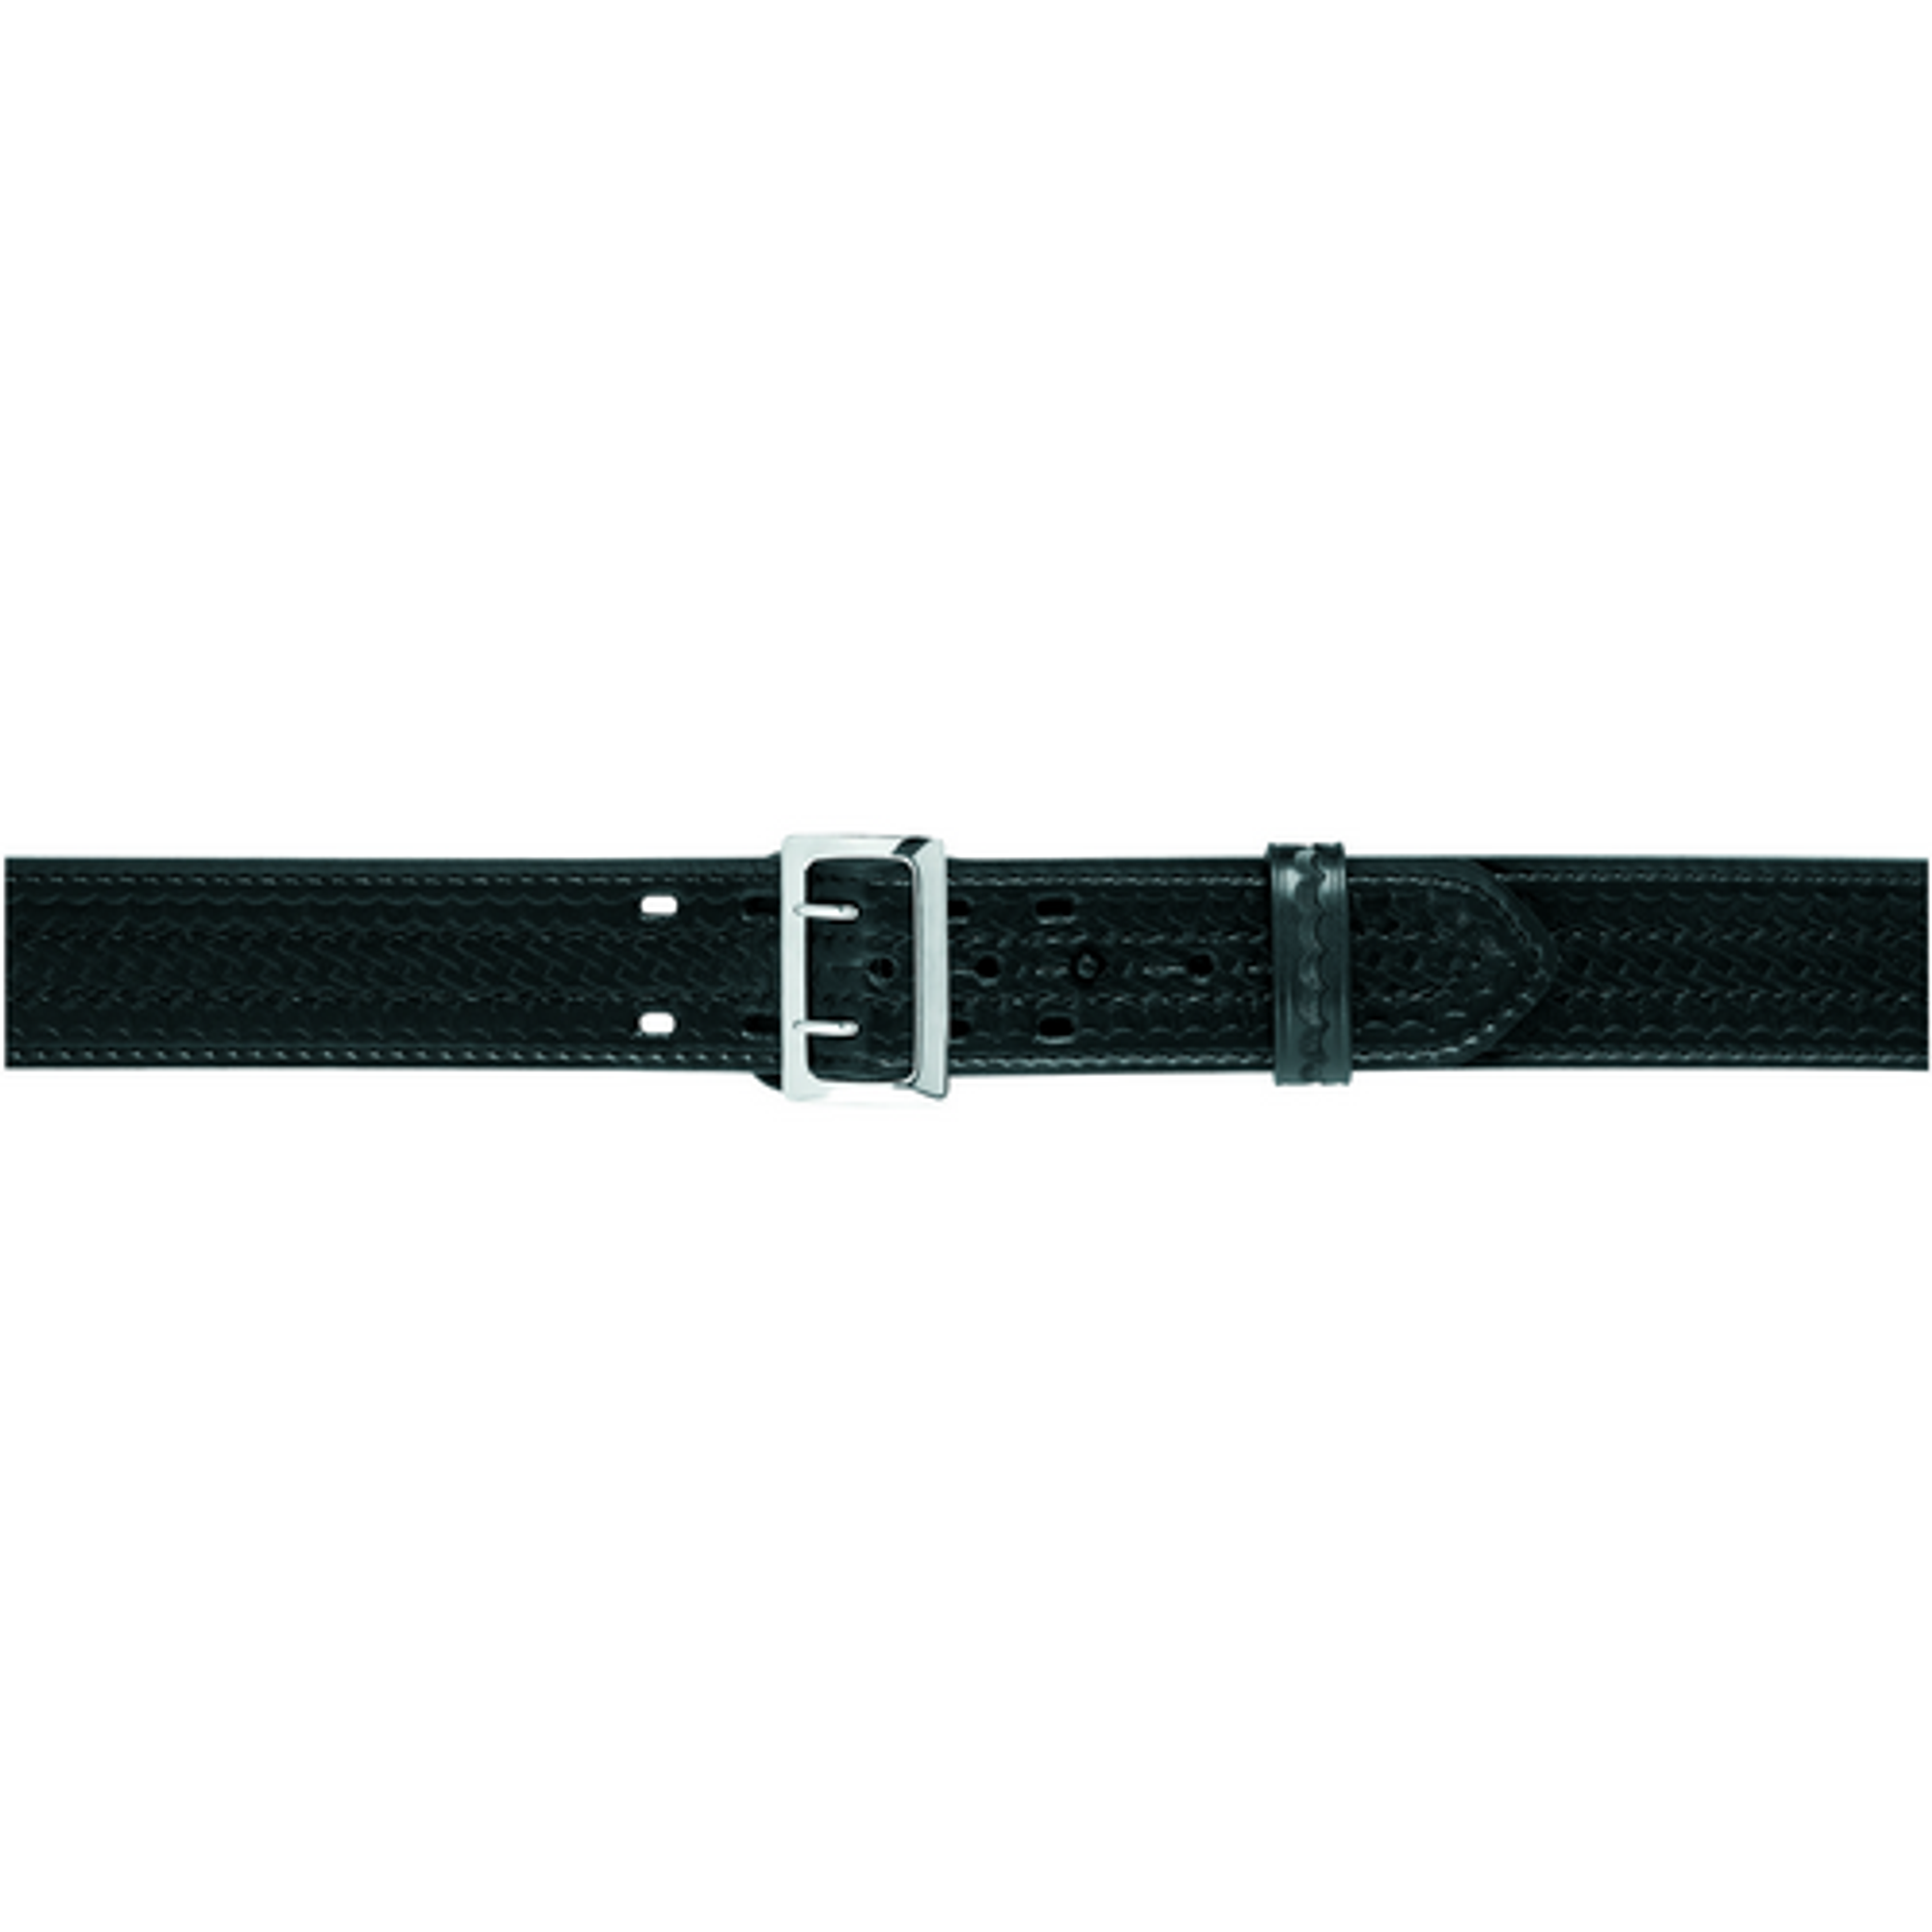 875 - Stitched Edge Sam Browne Duty Belt 2.25 (58mm) - KR875-40-8B